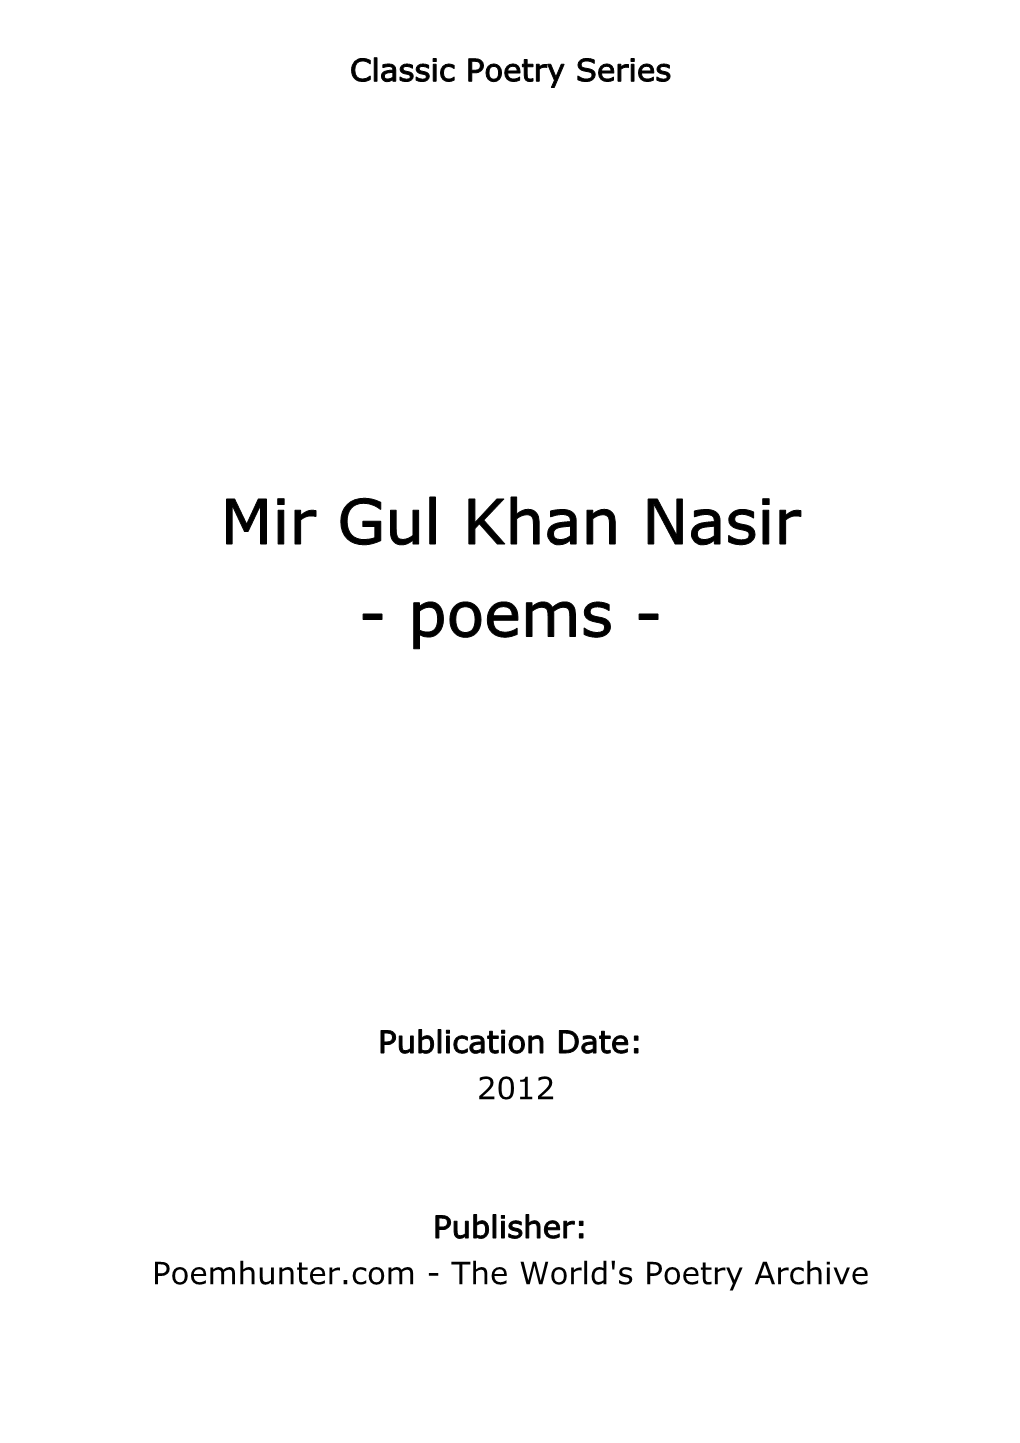 Mir Gul Khan Nasir - Poems